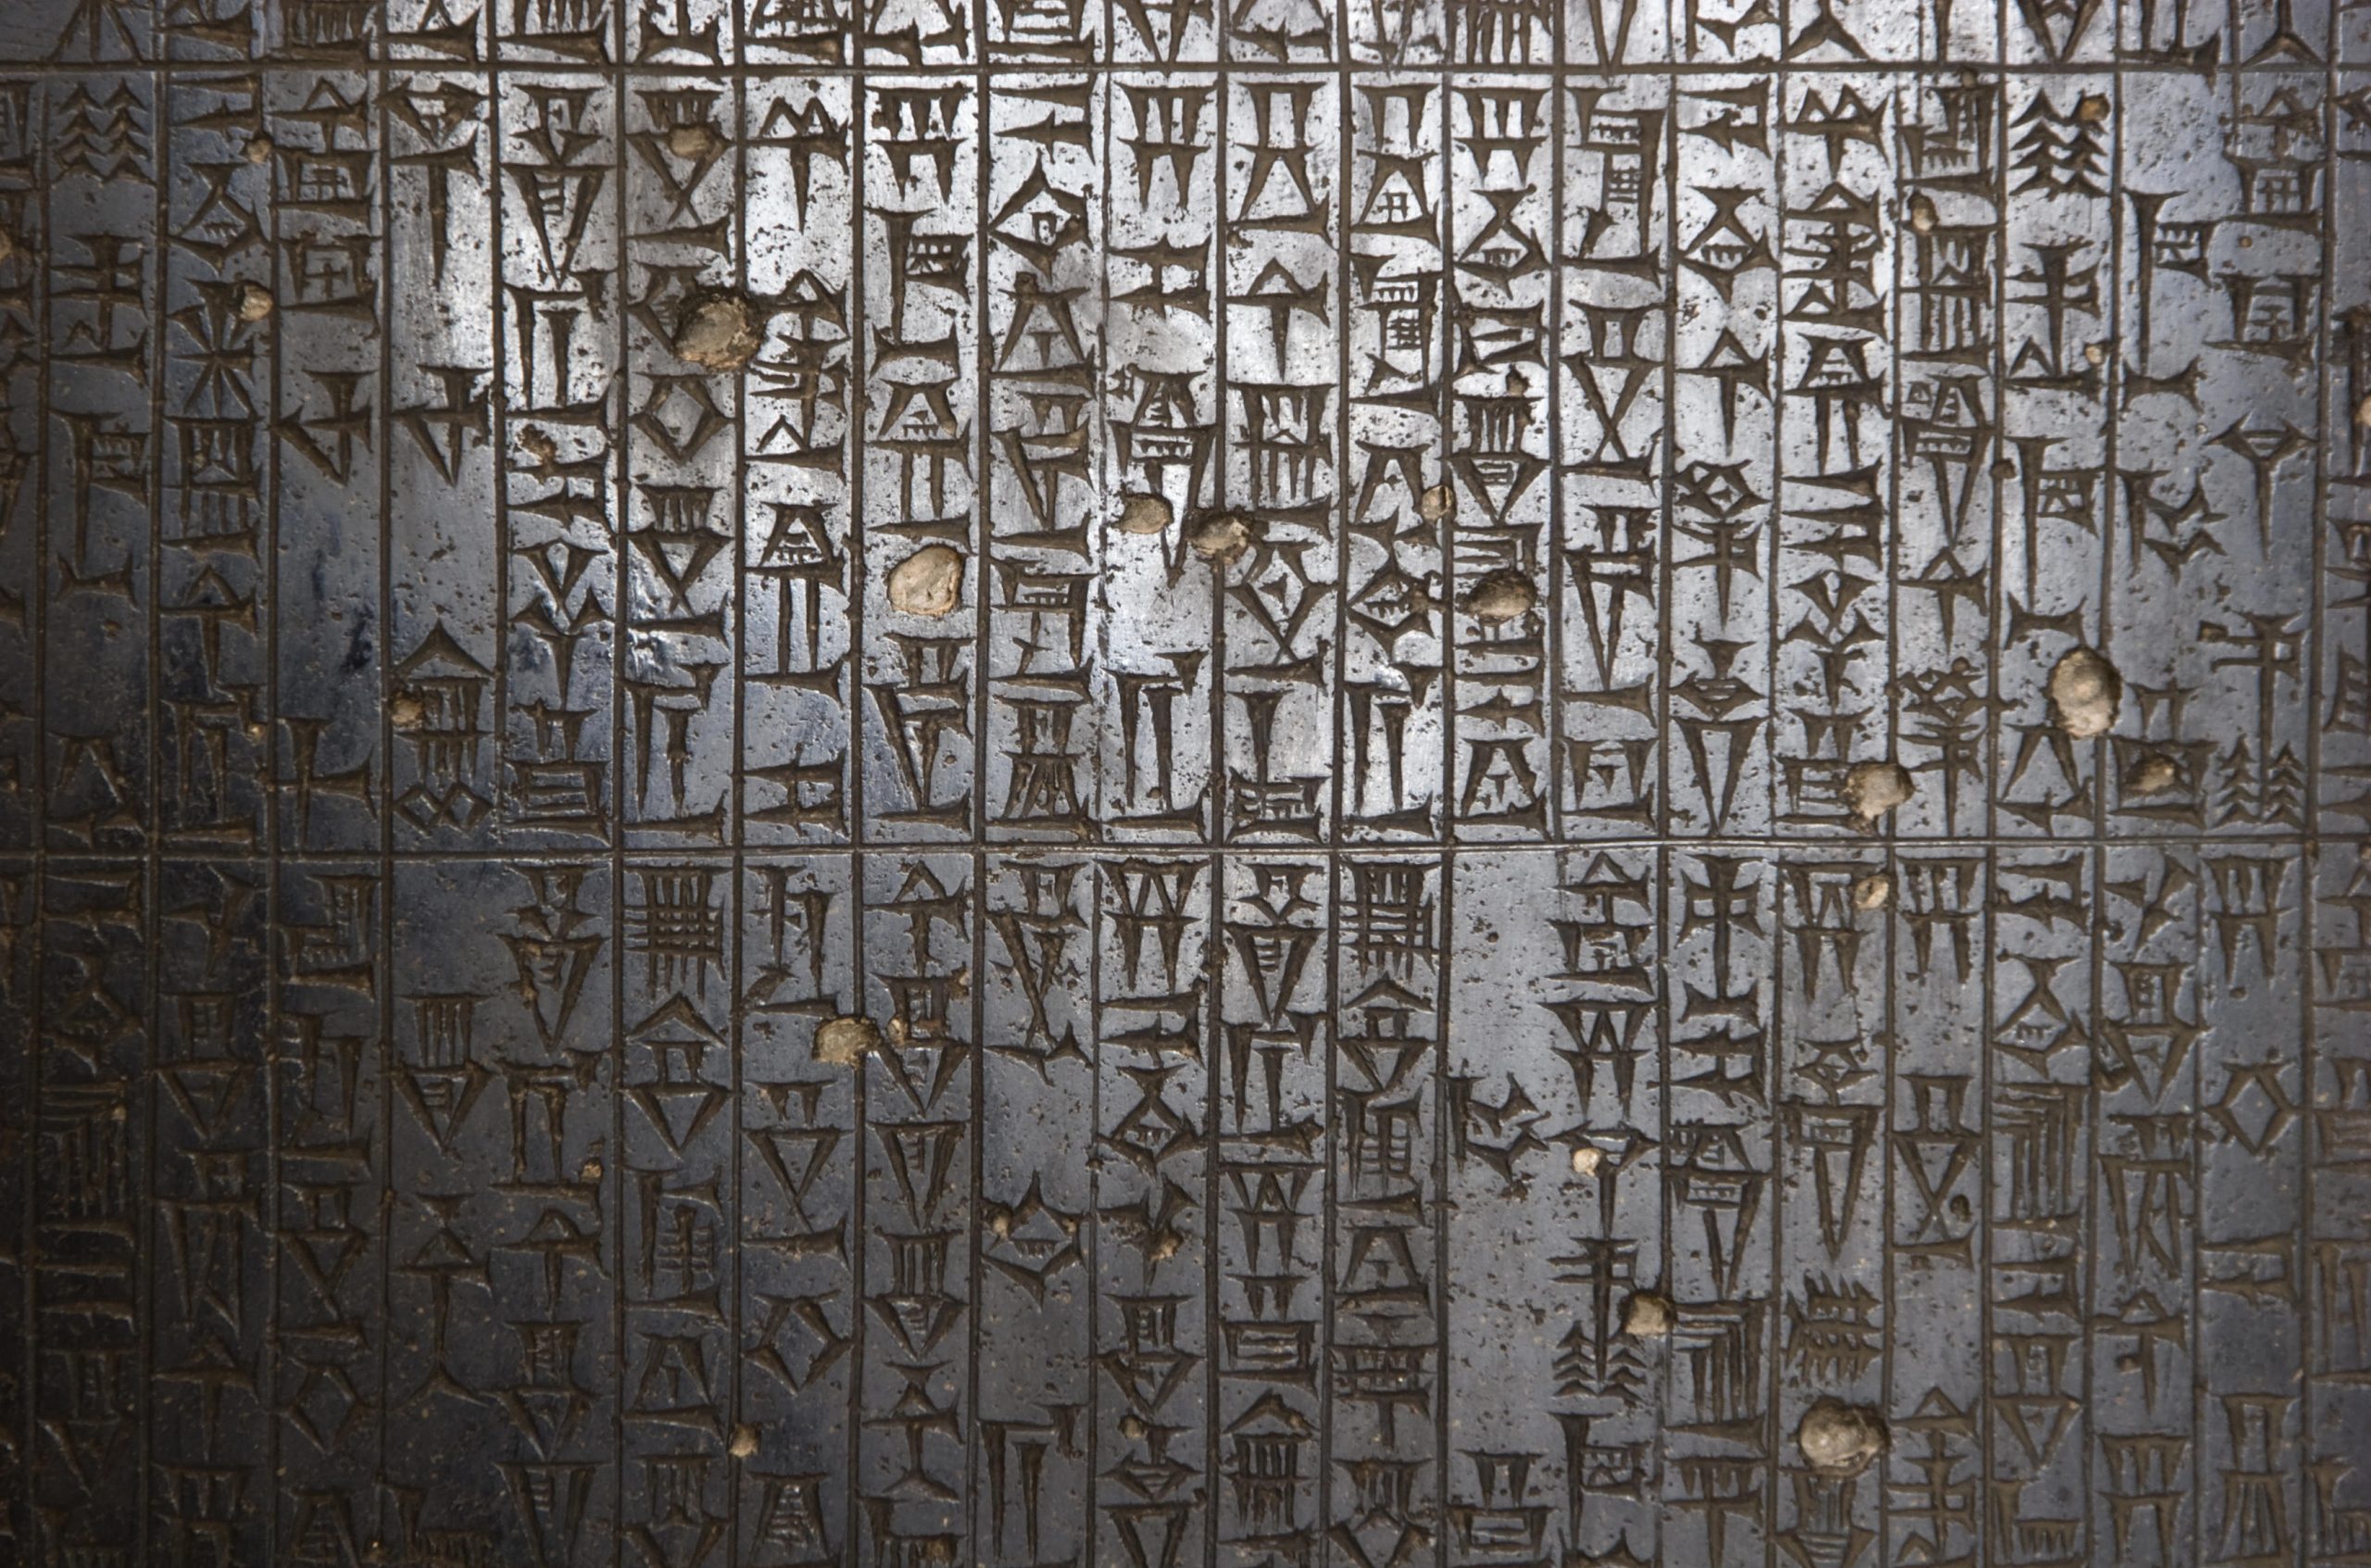 Black stone stele containing the Hammurabi code of laws.